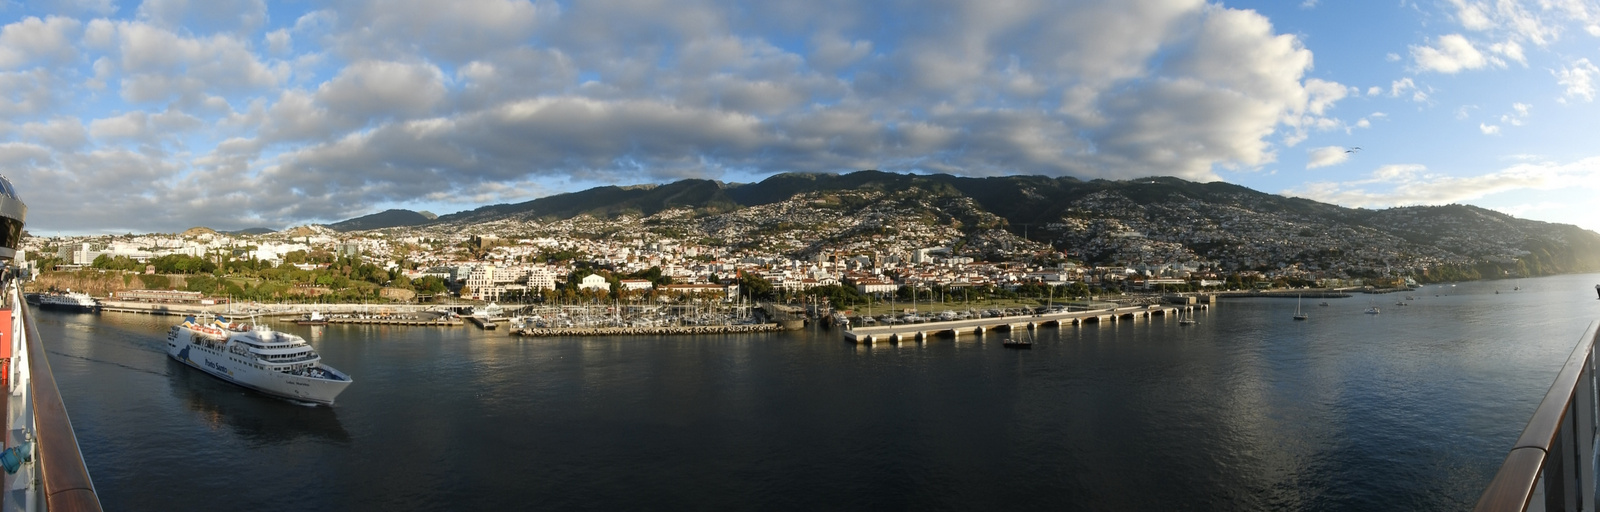 Funchal kikötője